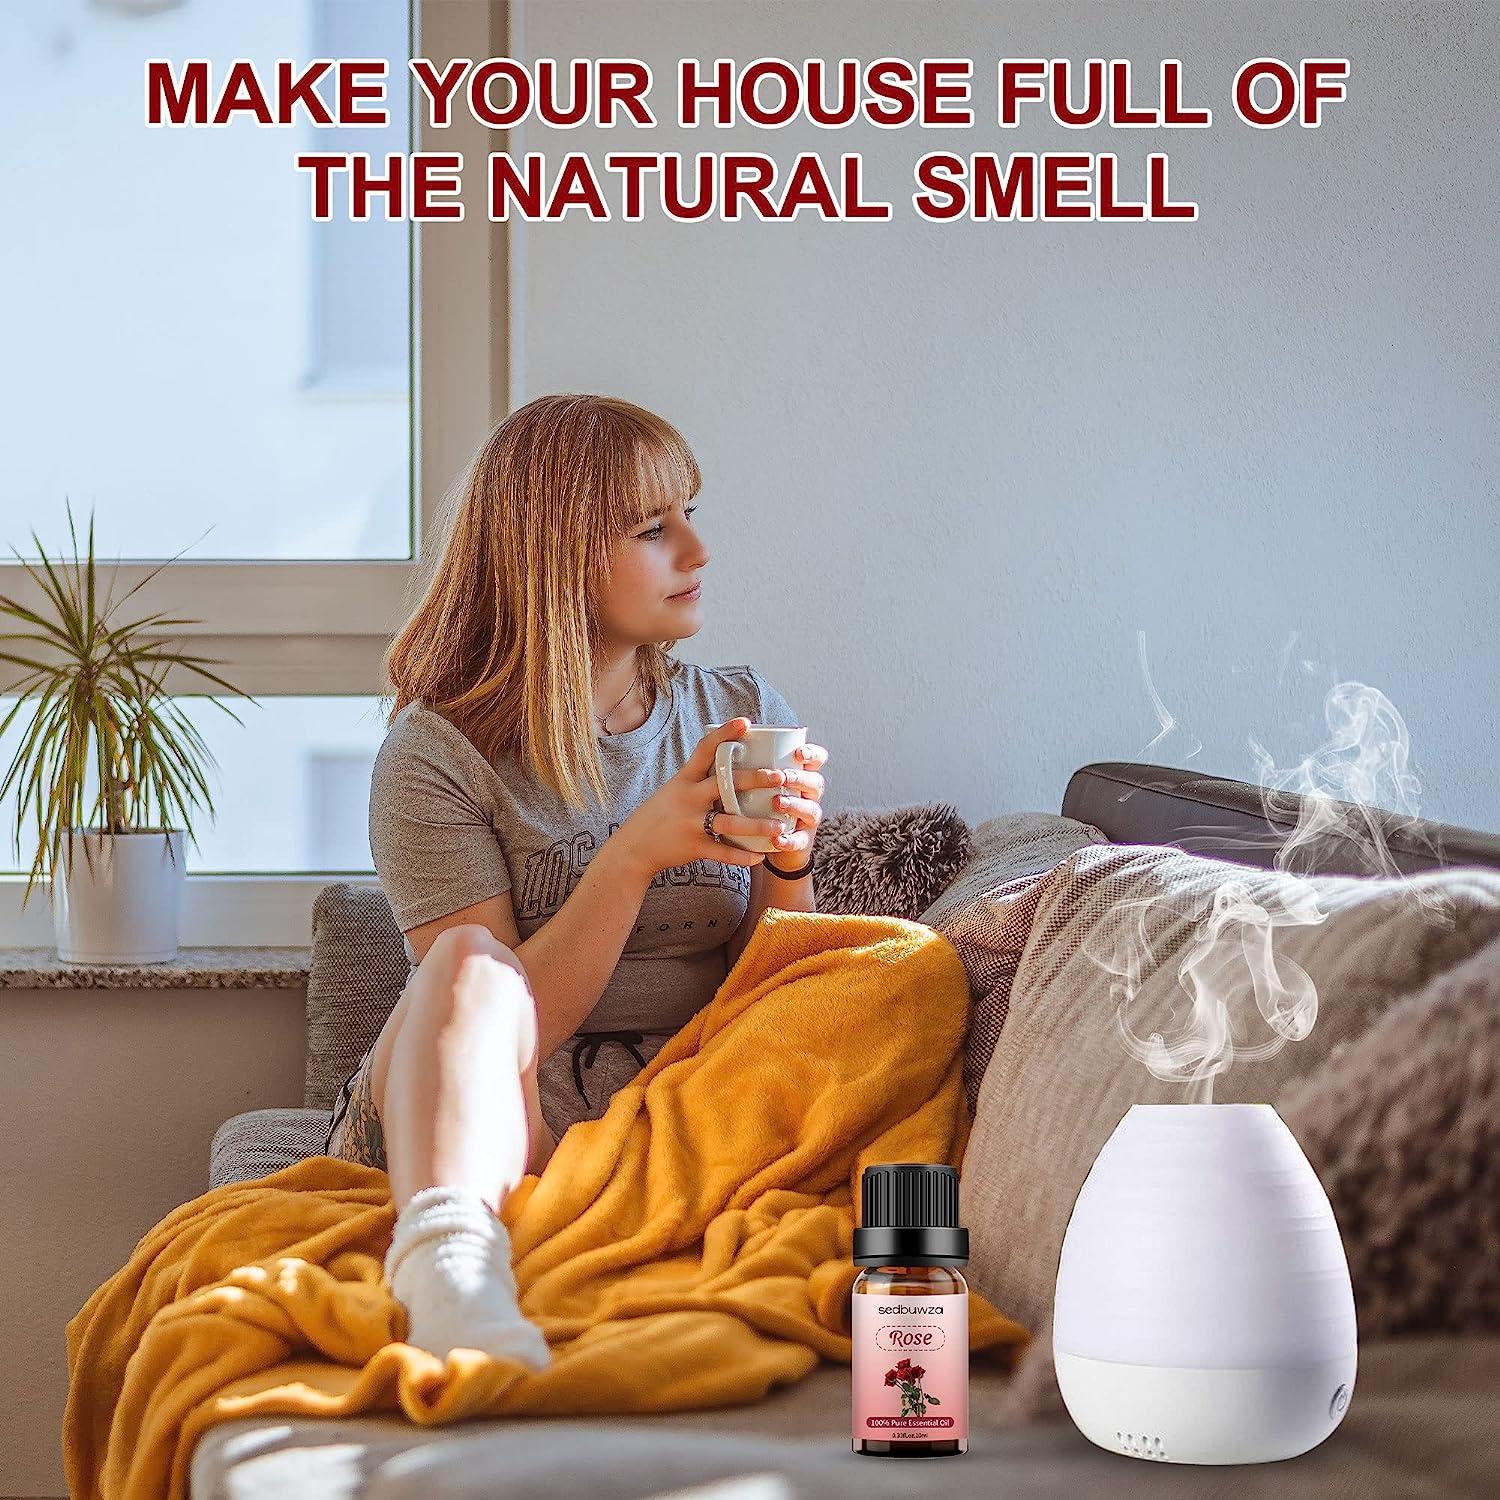  Vanilla Essential Oil 3.38 oz, 100% Pure Vanilla Aromatherapy  Oil for Diffuser, Perfumes, Massage, Soap Making : Health & Household